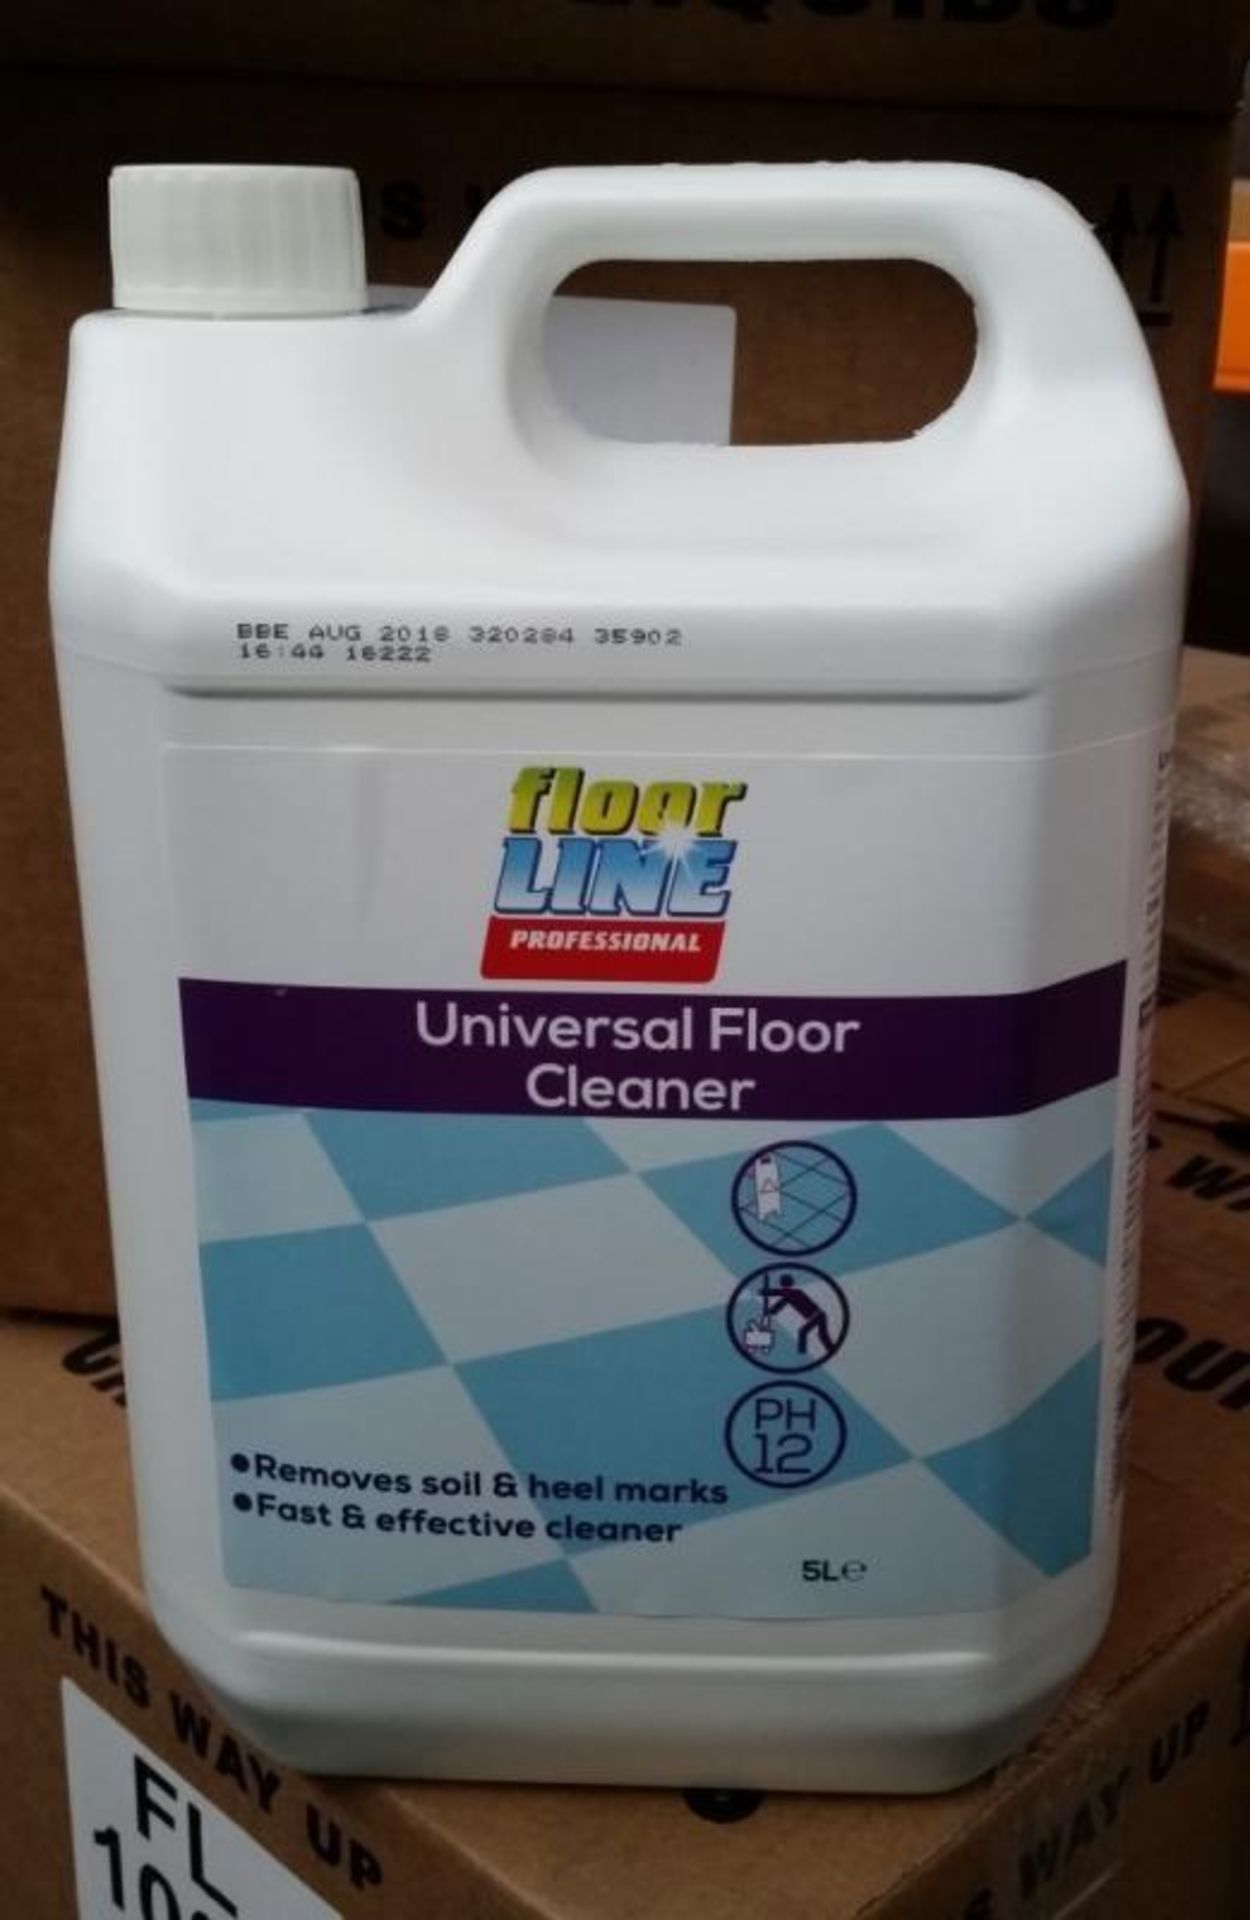 2 x Floor Line Professional 5 Litre Universal Floor Cleaner - Removes Soil &amp; Heel Marks - Fast & - Image 5 of 7